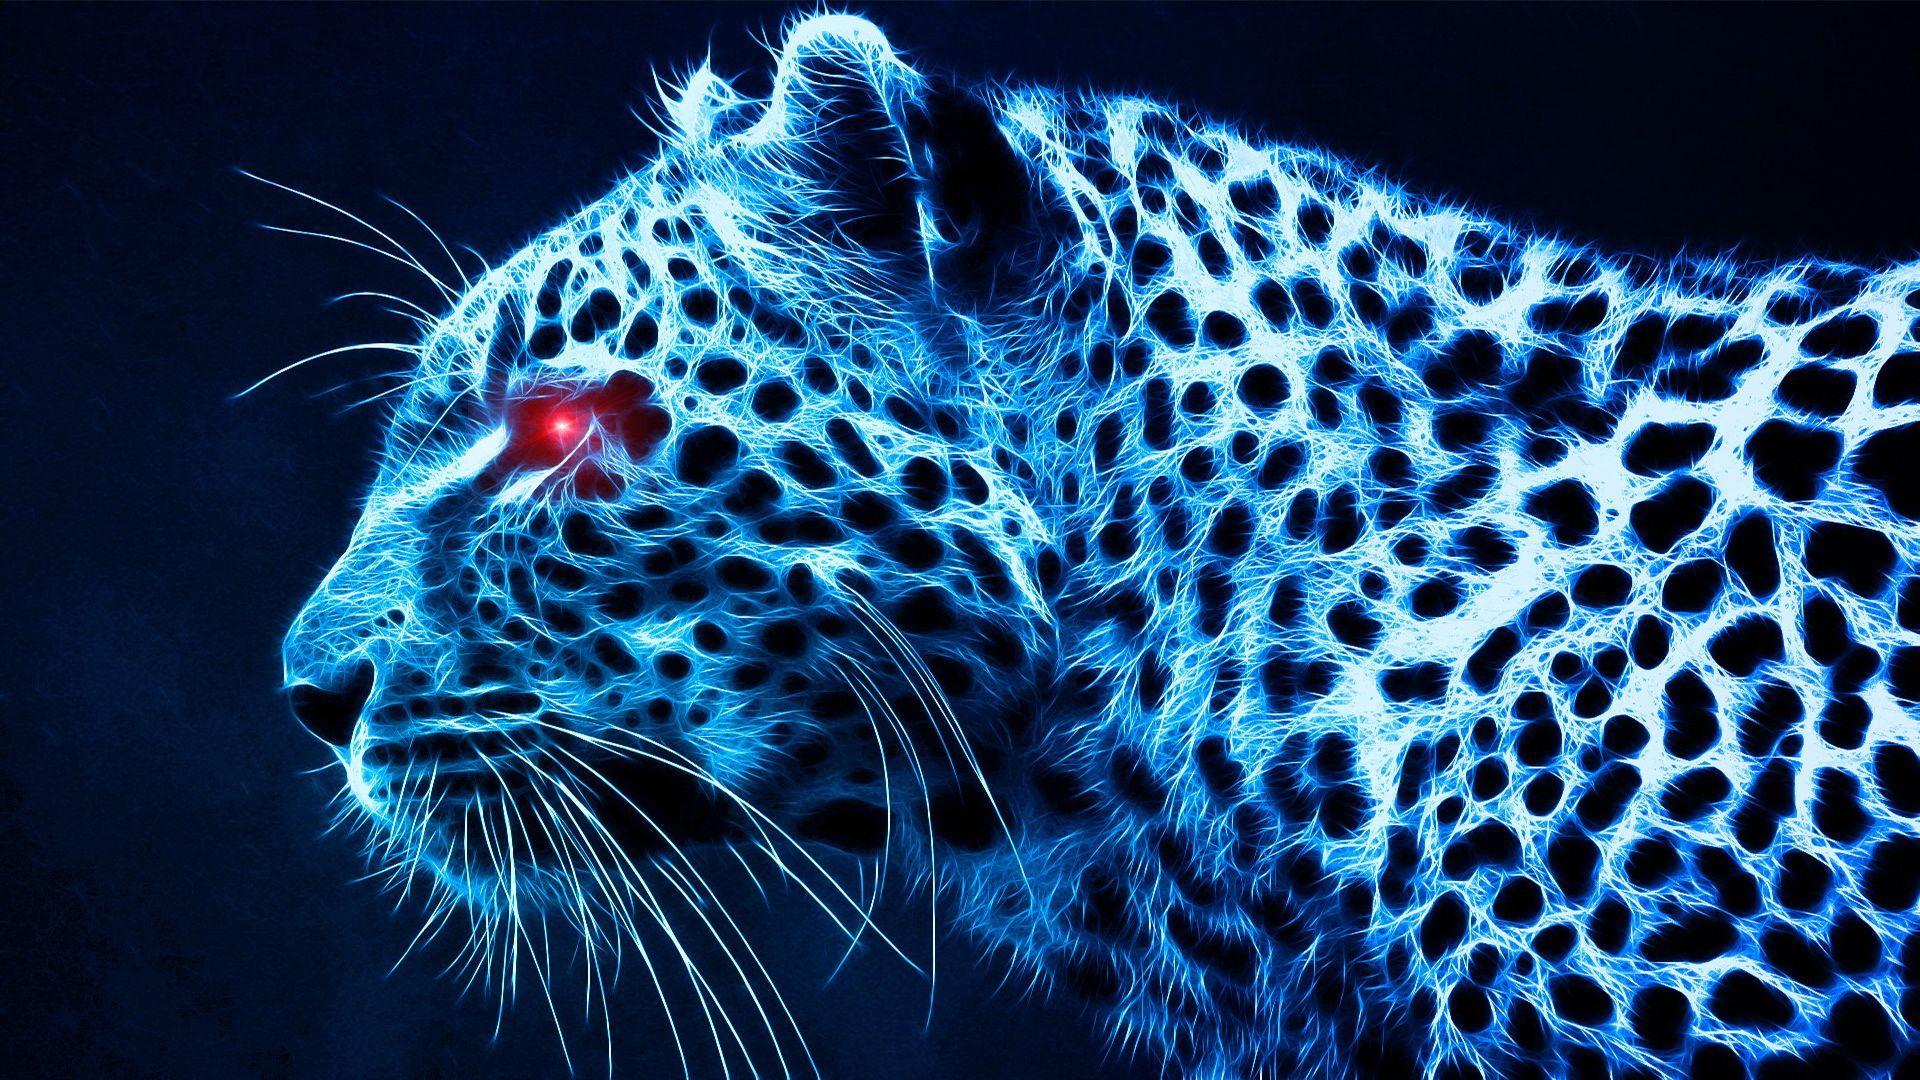 WallpaperCastle.com. Cheetah Wallpaper Free Download